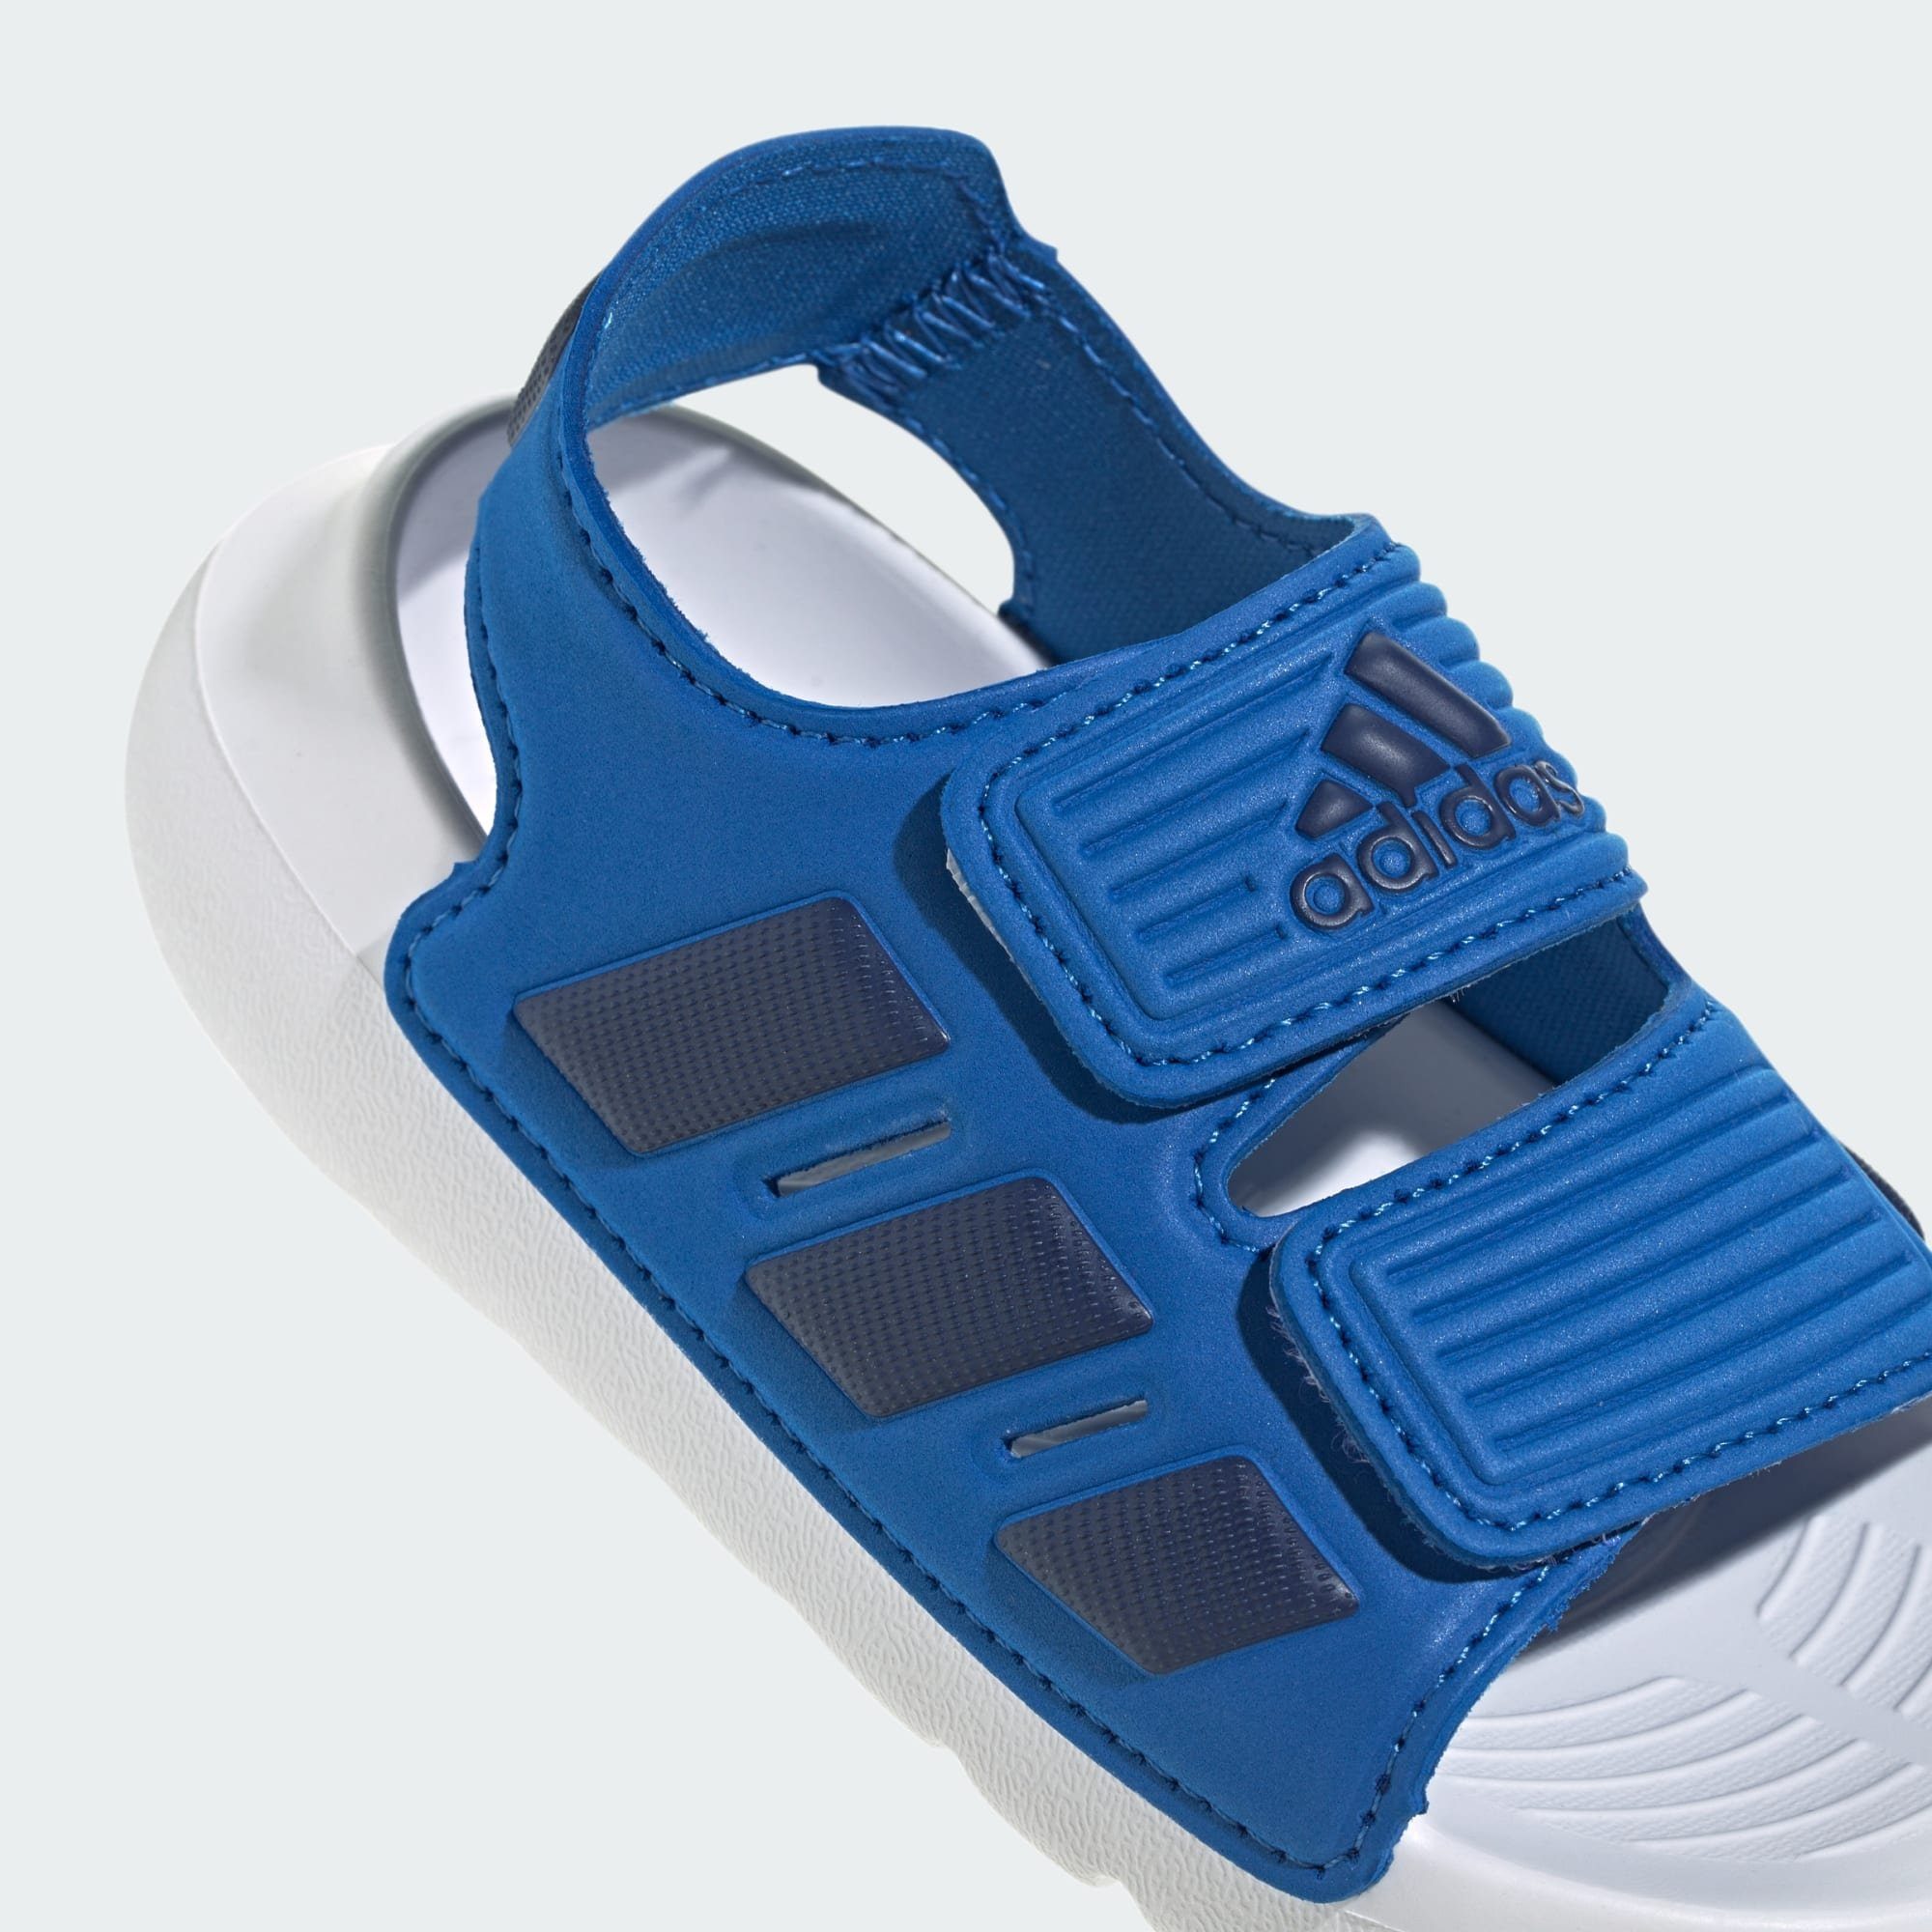 adidas / Cloud Dark Blue White Royal Bright KIDS 2.0 SANDALS Badesandale / Sportswear ALTASWIM